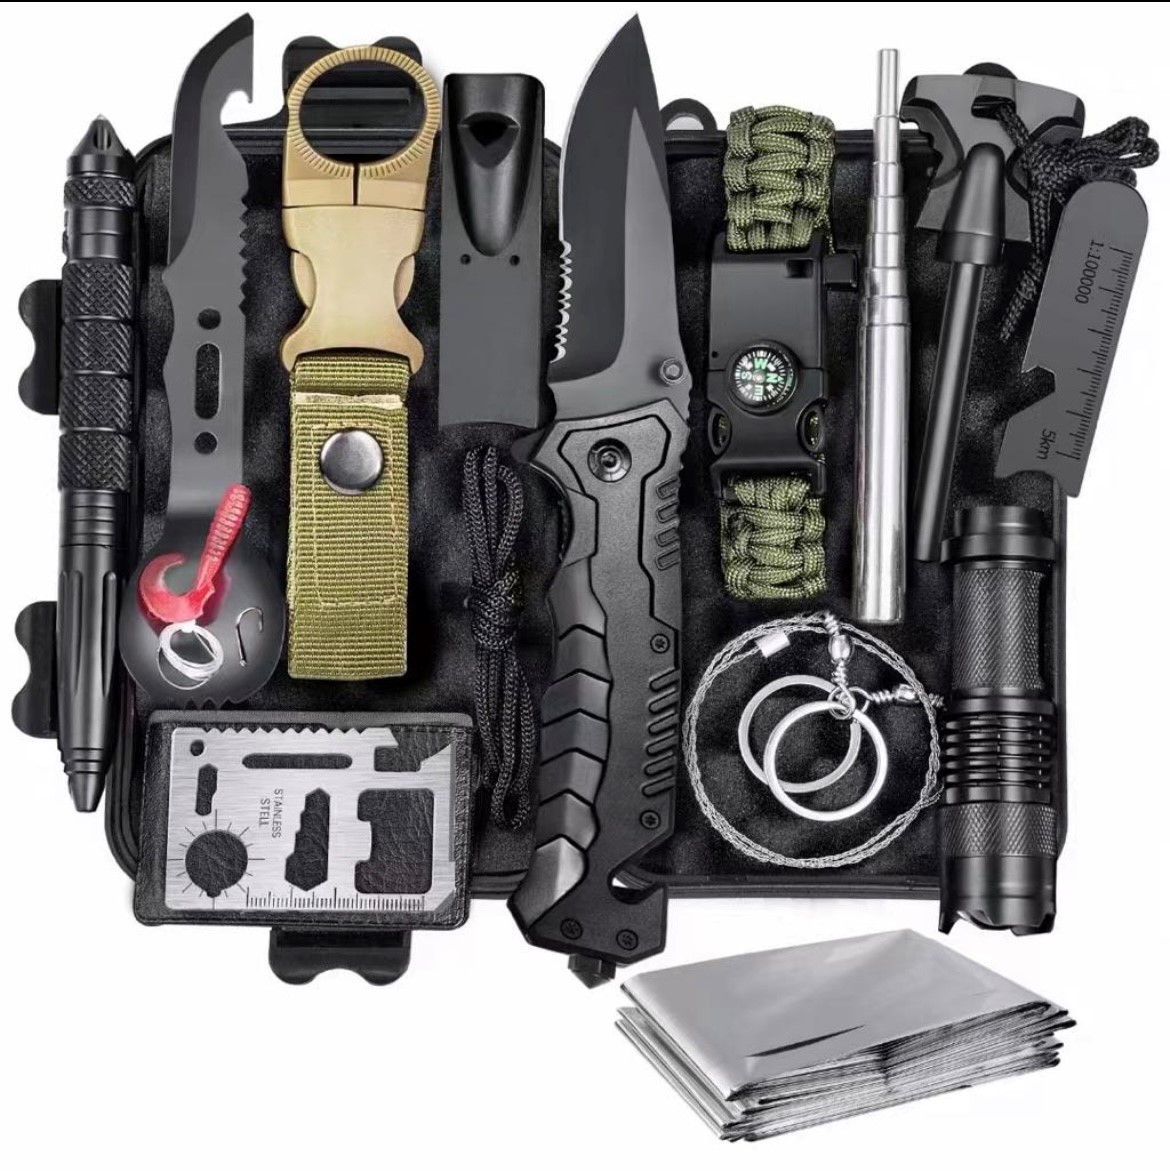 47897 - Holiday Gift Compact Emergency Survival Kits USA